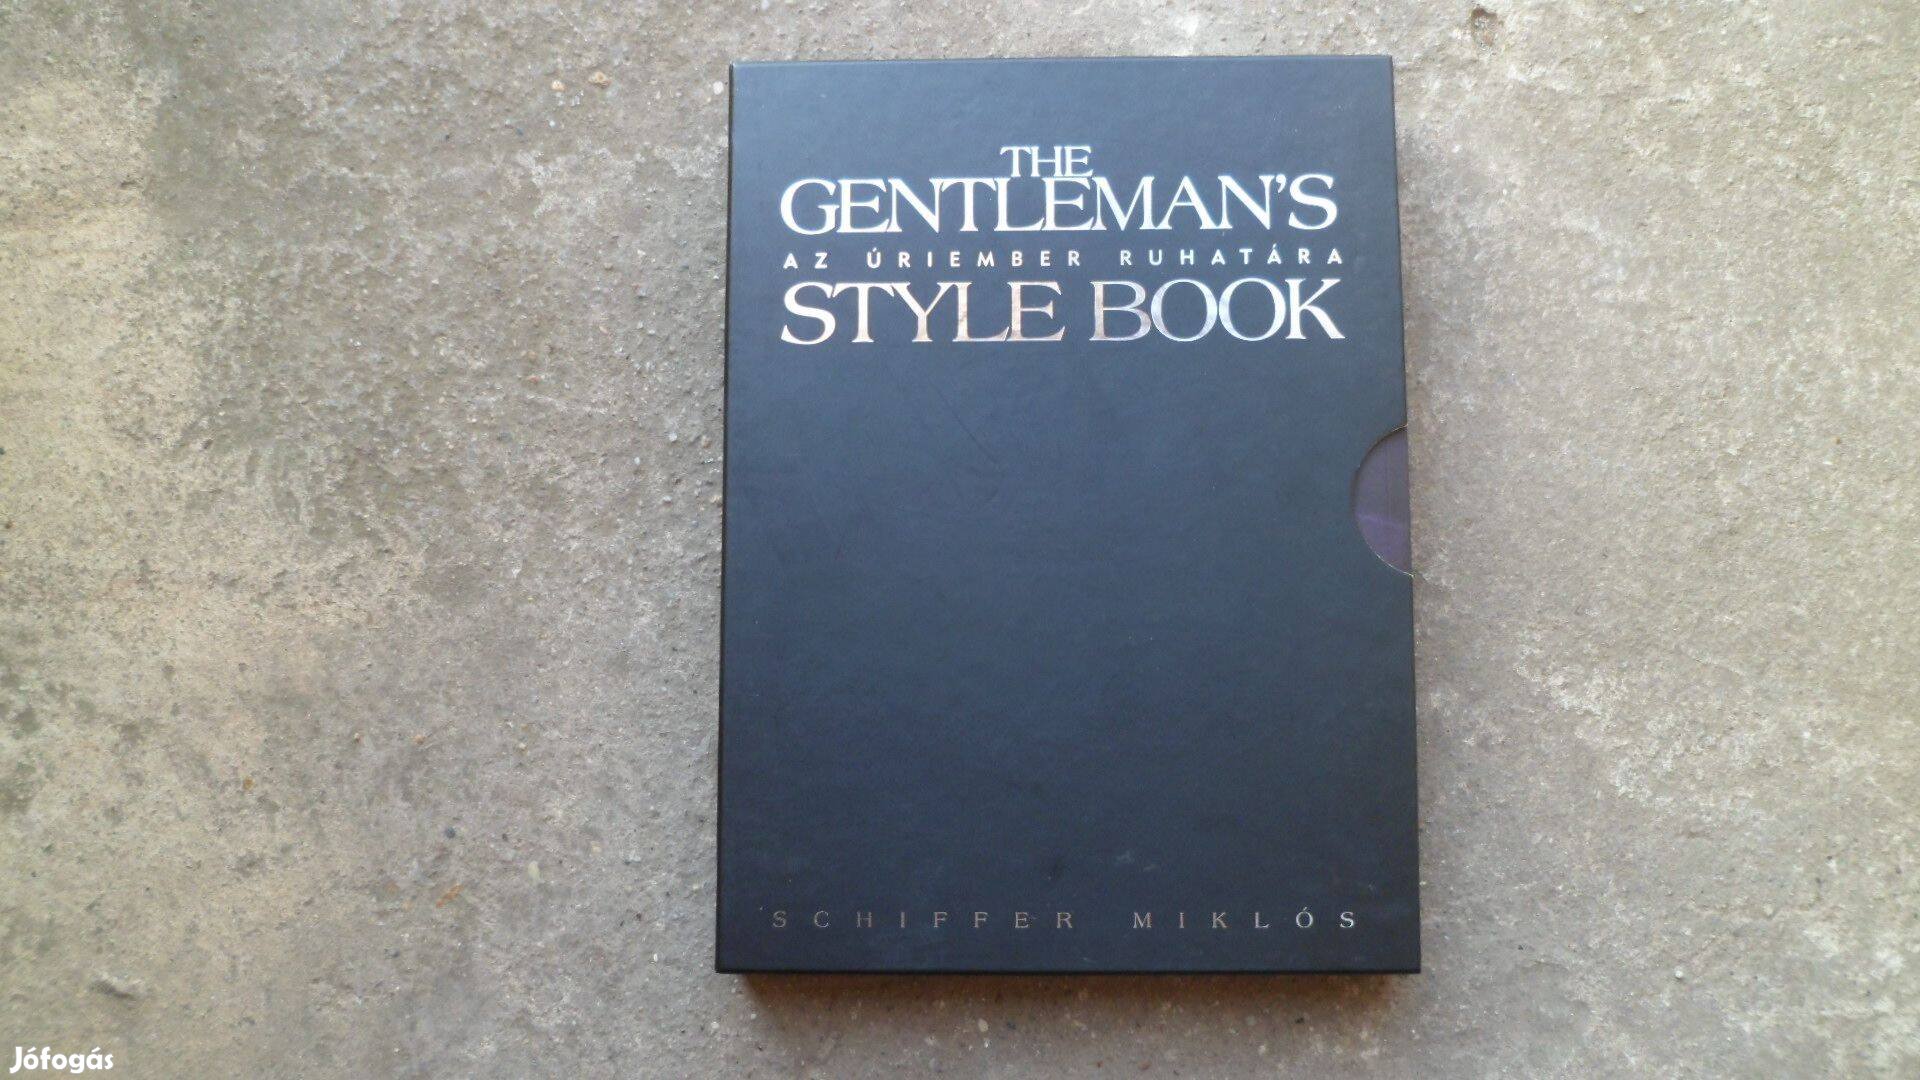 Schiffer Miklós - Az Úriember Ruhatára, The Gentleman's Style Book